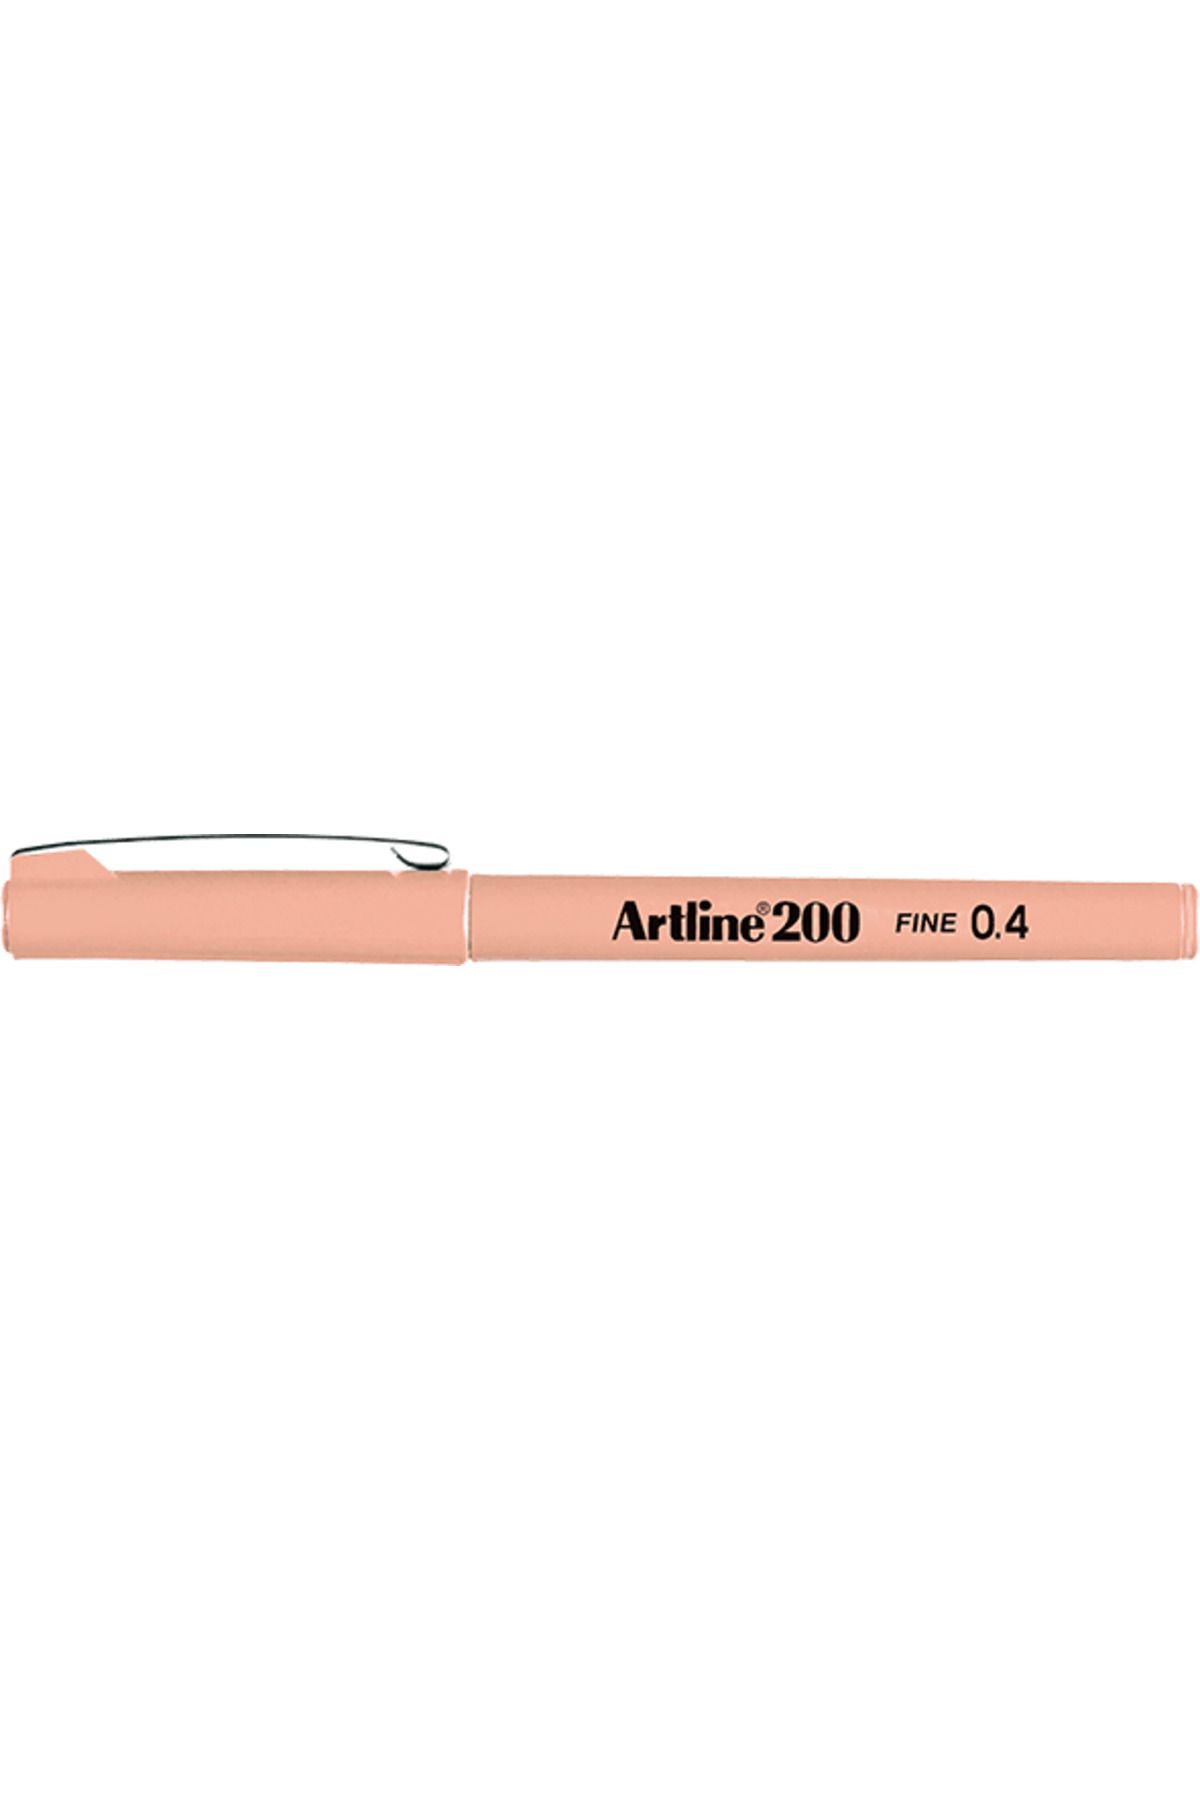 artline 200 Fineliner 0.4mm Keçe Uçlu Kalem Kayısı (APRİCOT)